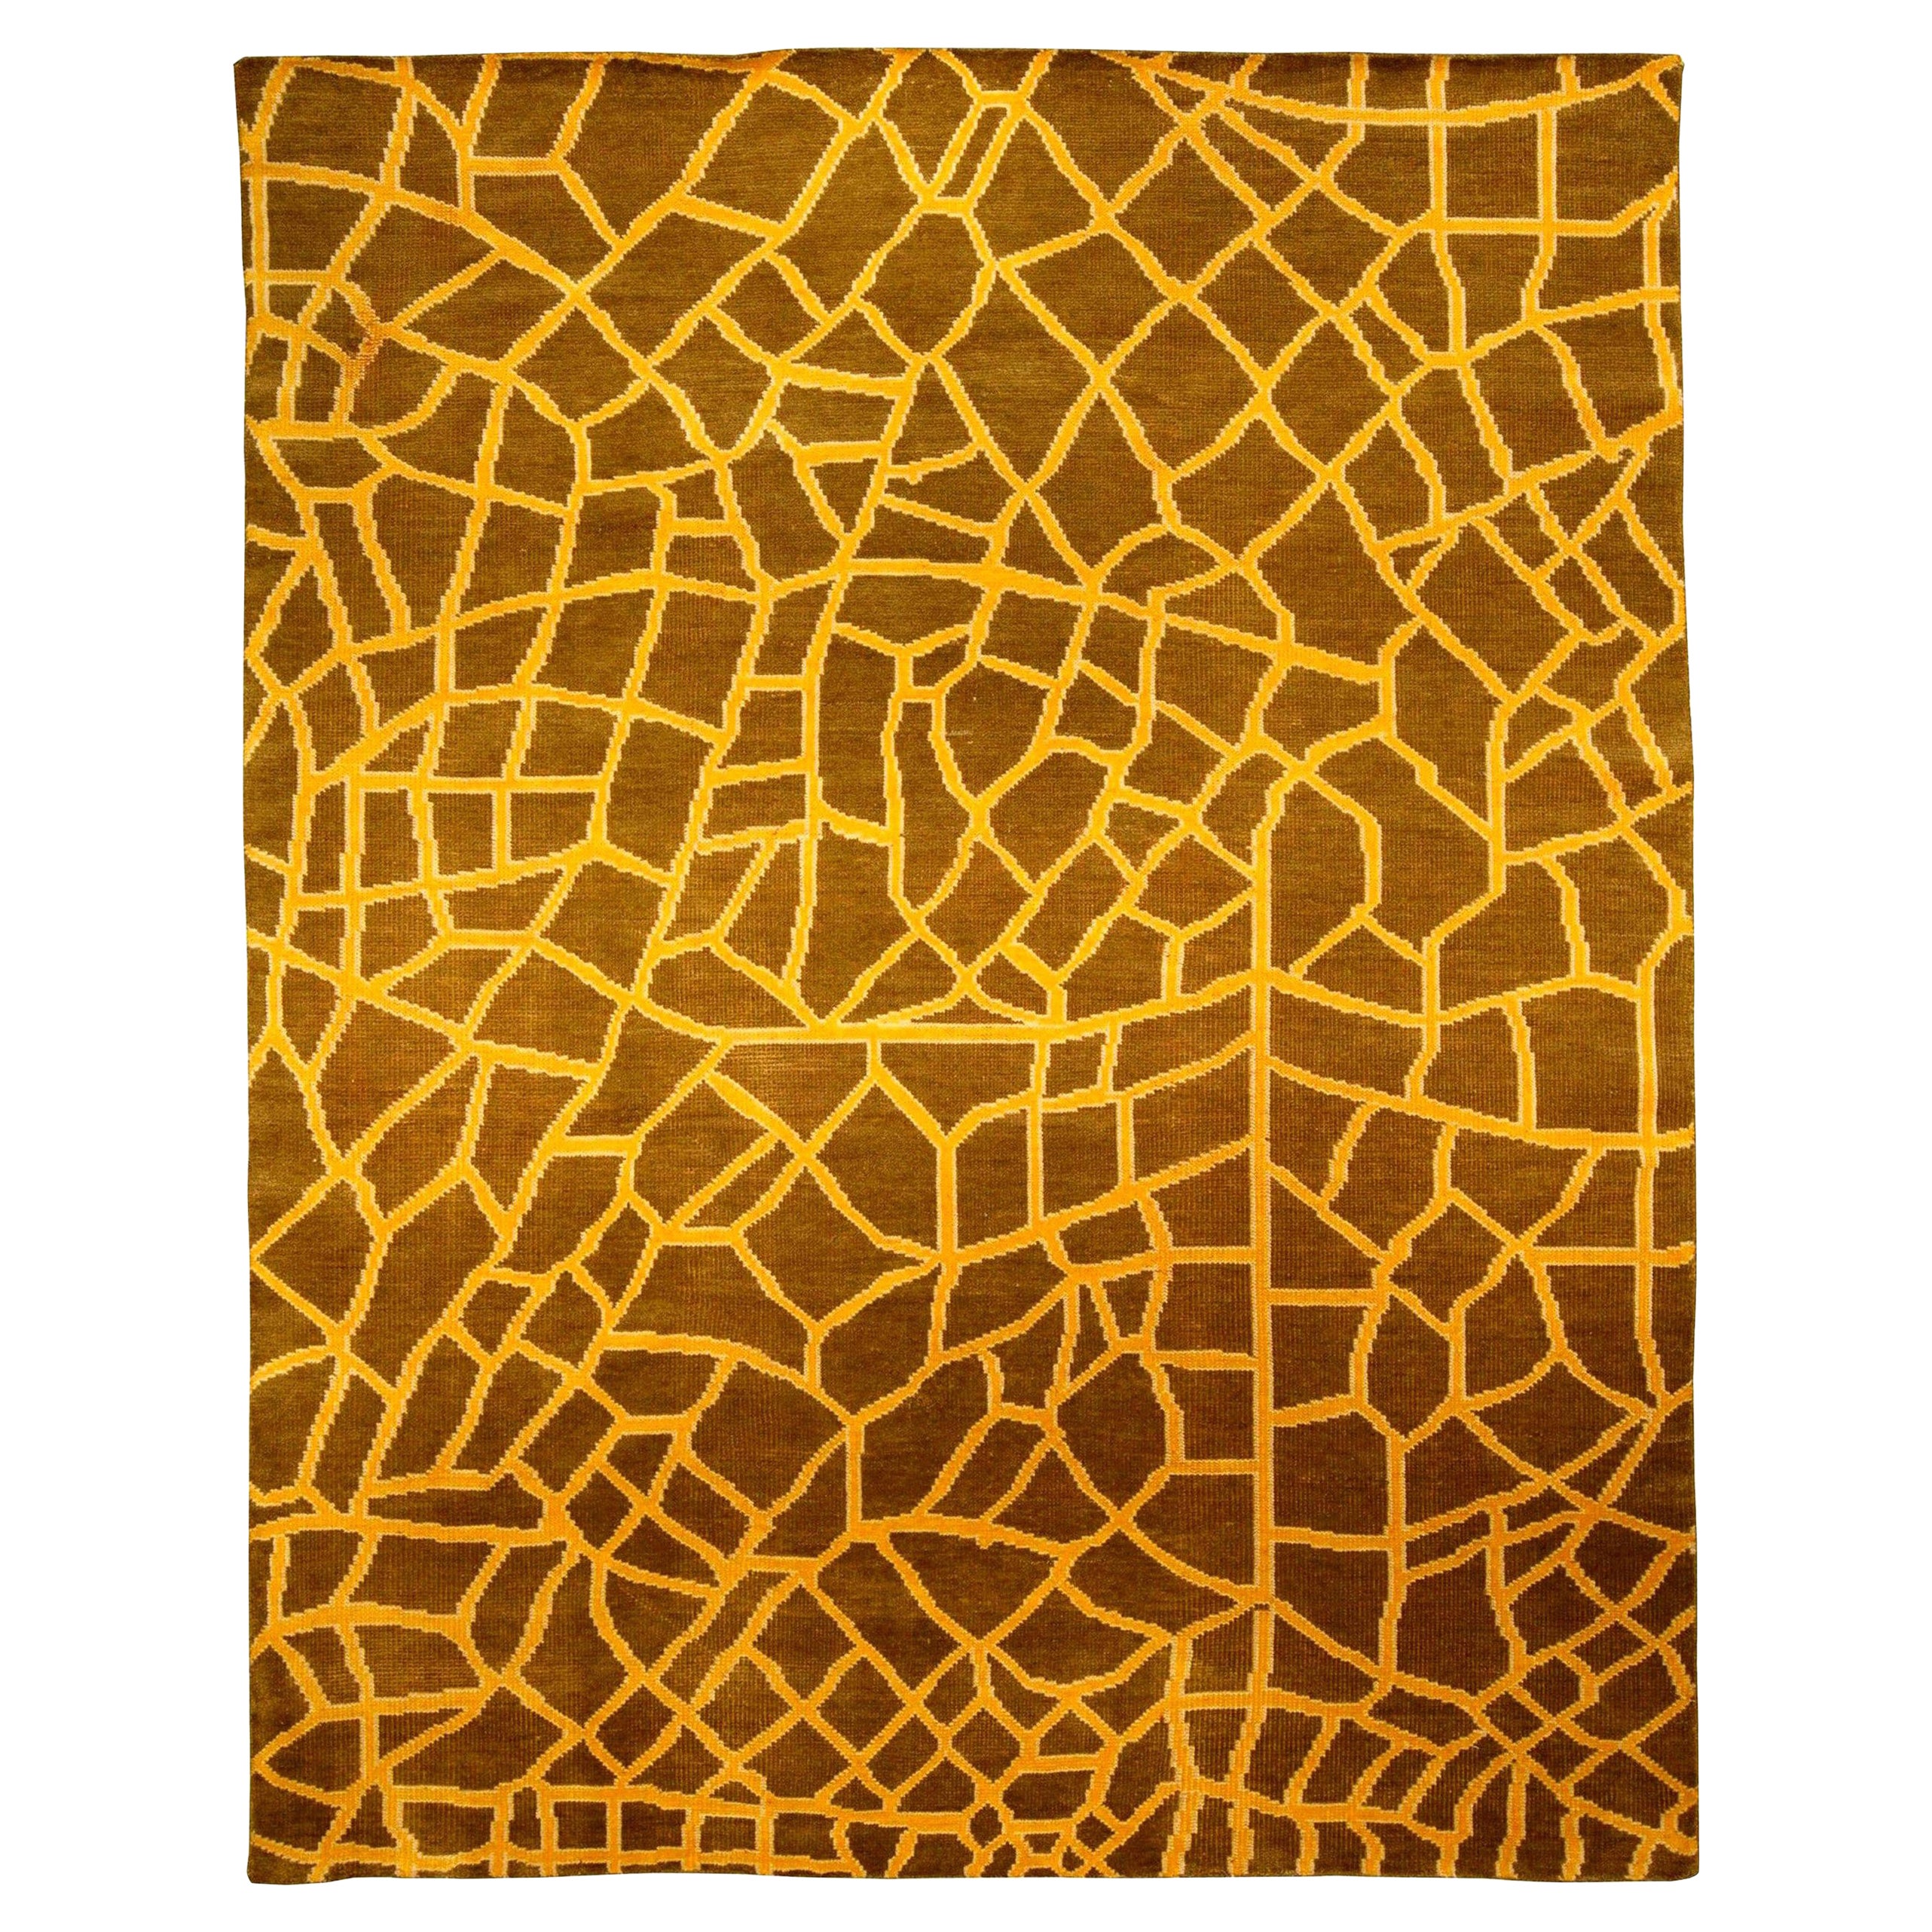 Contemporary Abstract Snake Skin Handmade Wool Rug by Doris Leslie Blau For Sale